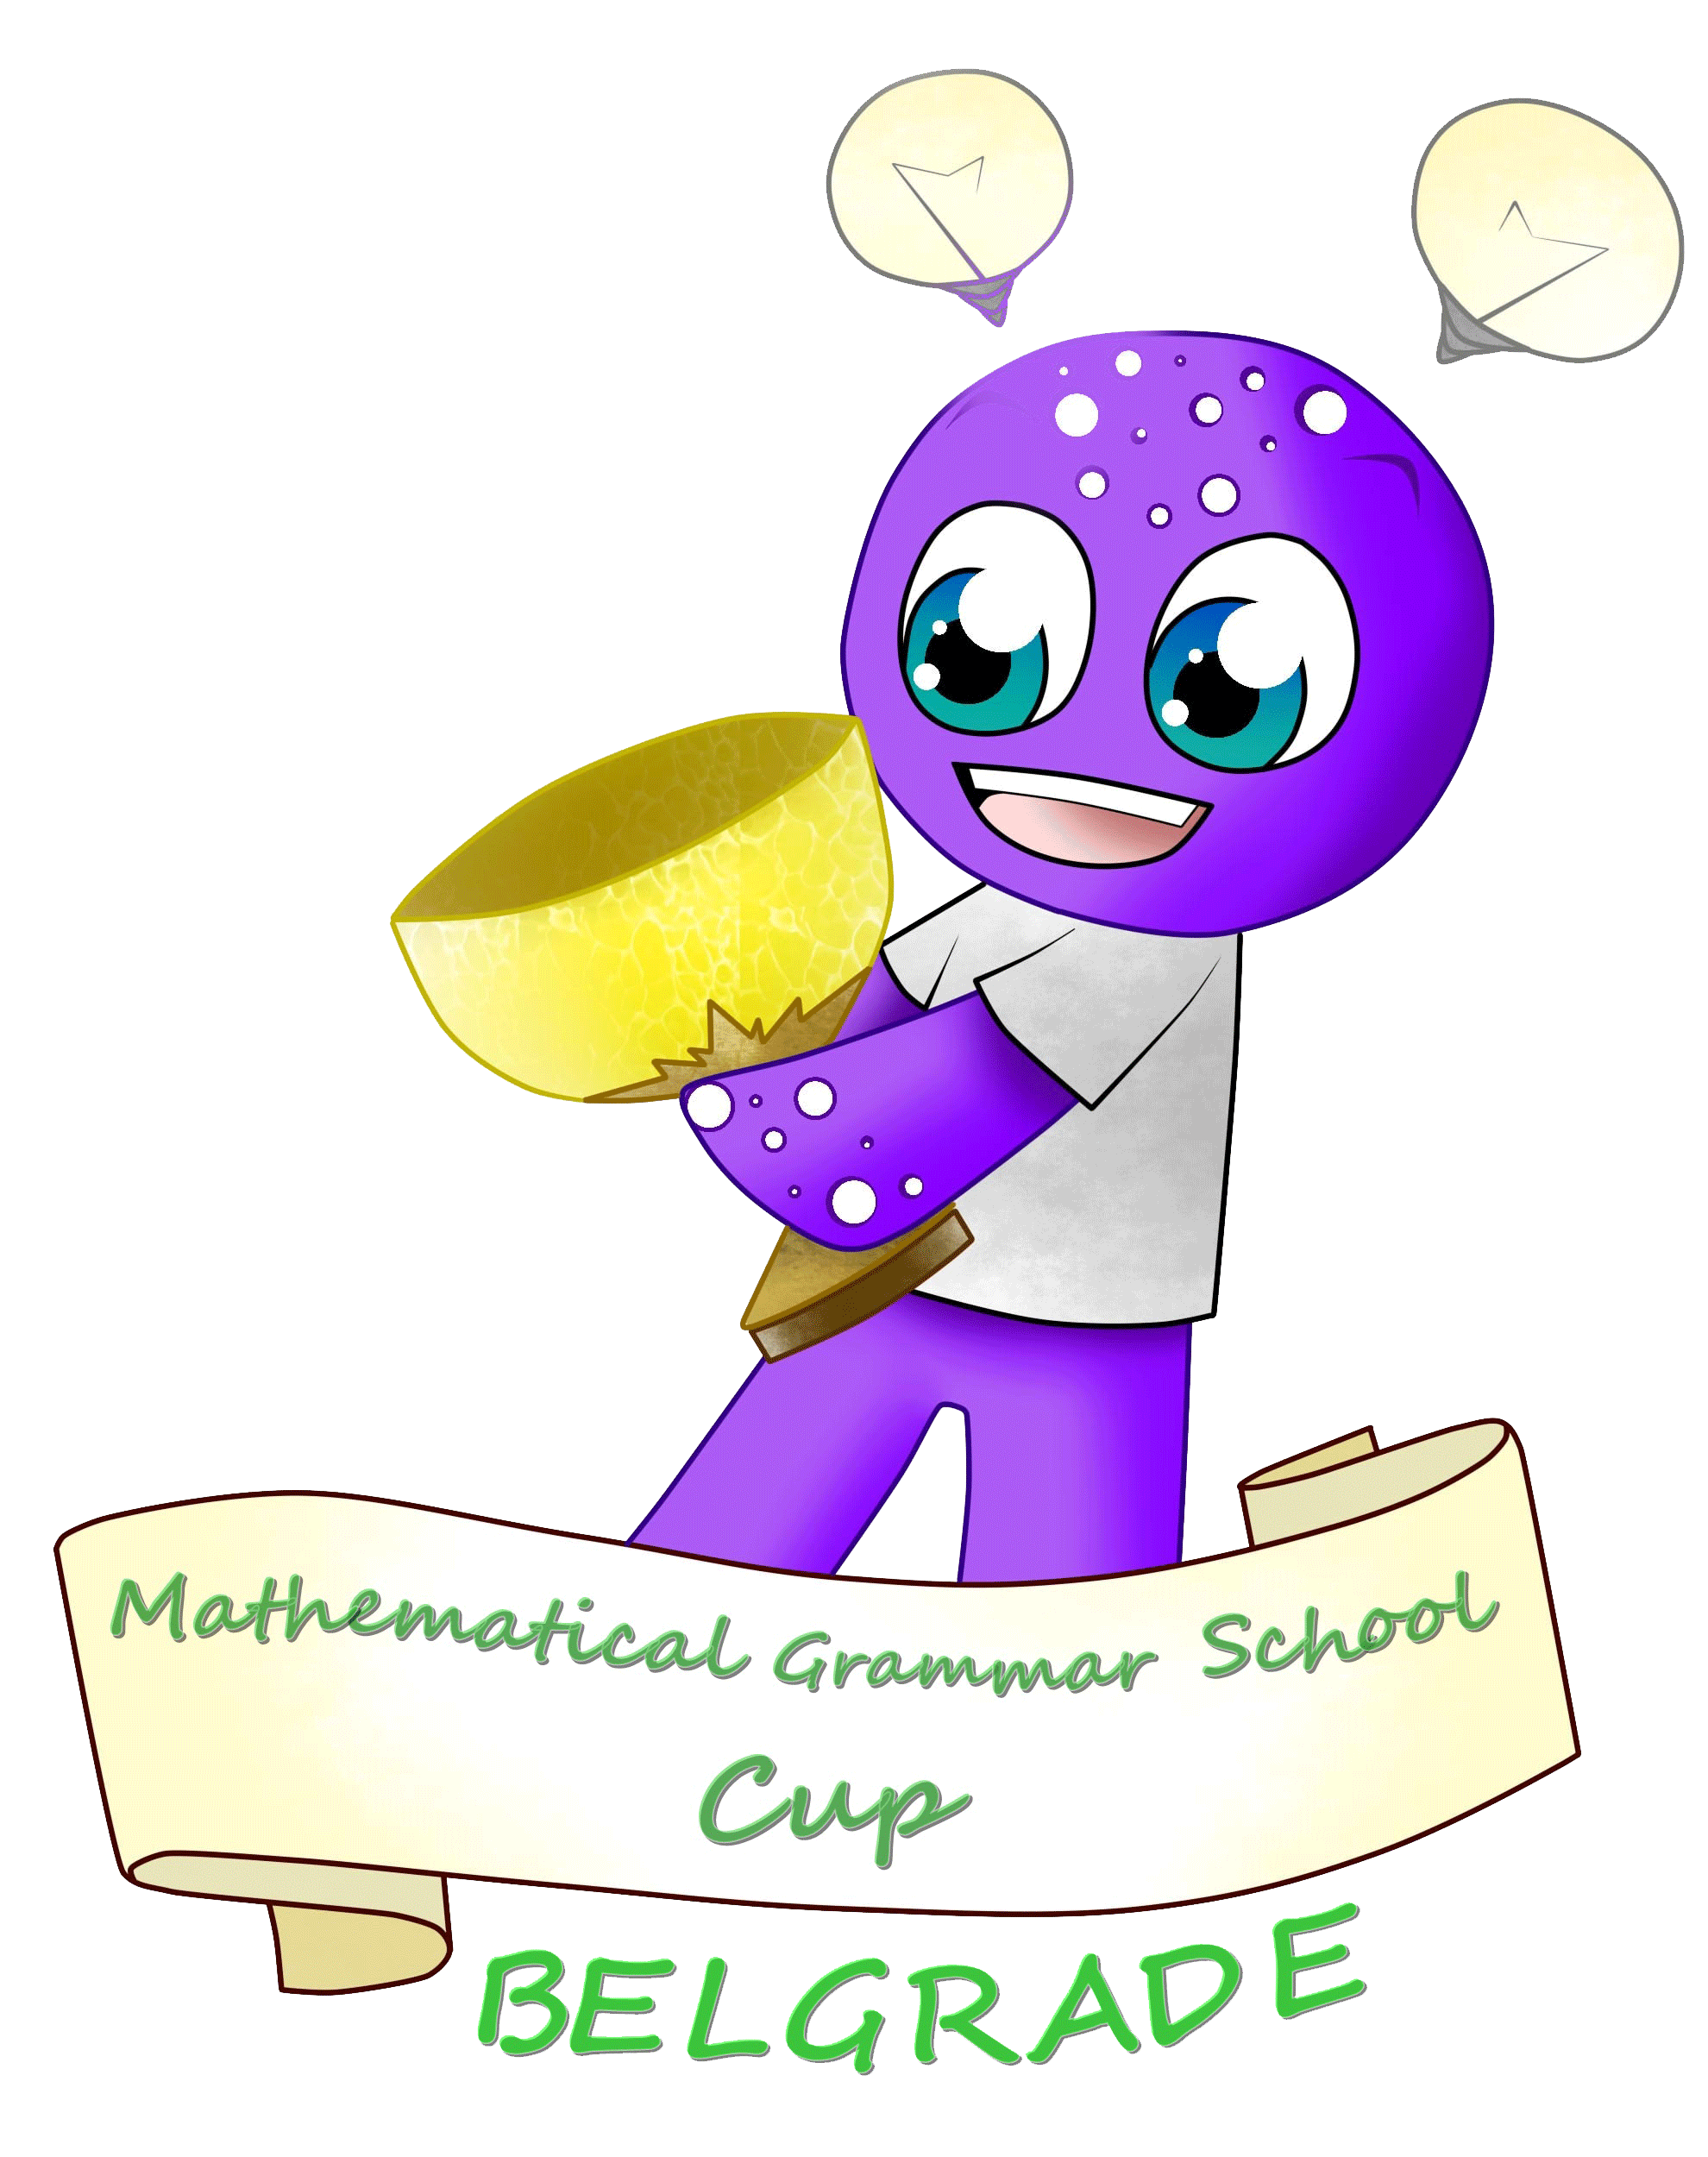 The Mathematical Grammar School Cup